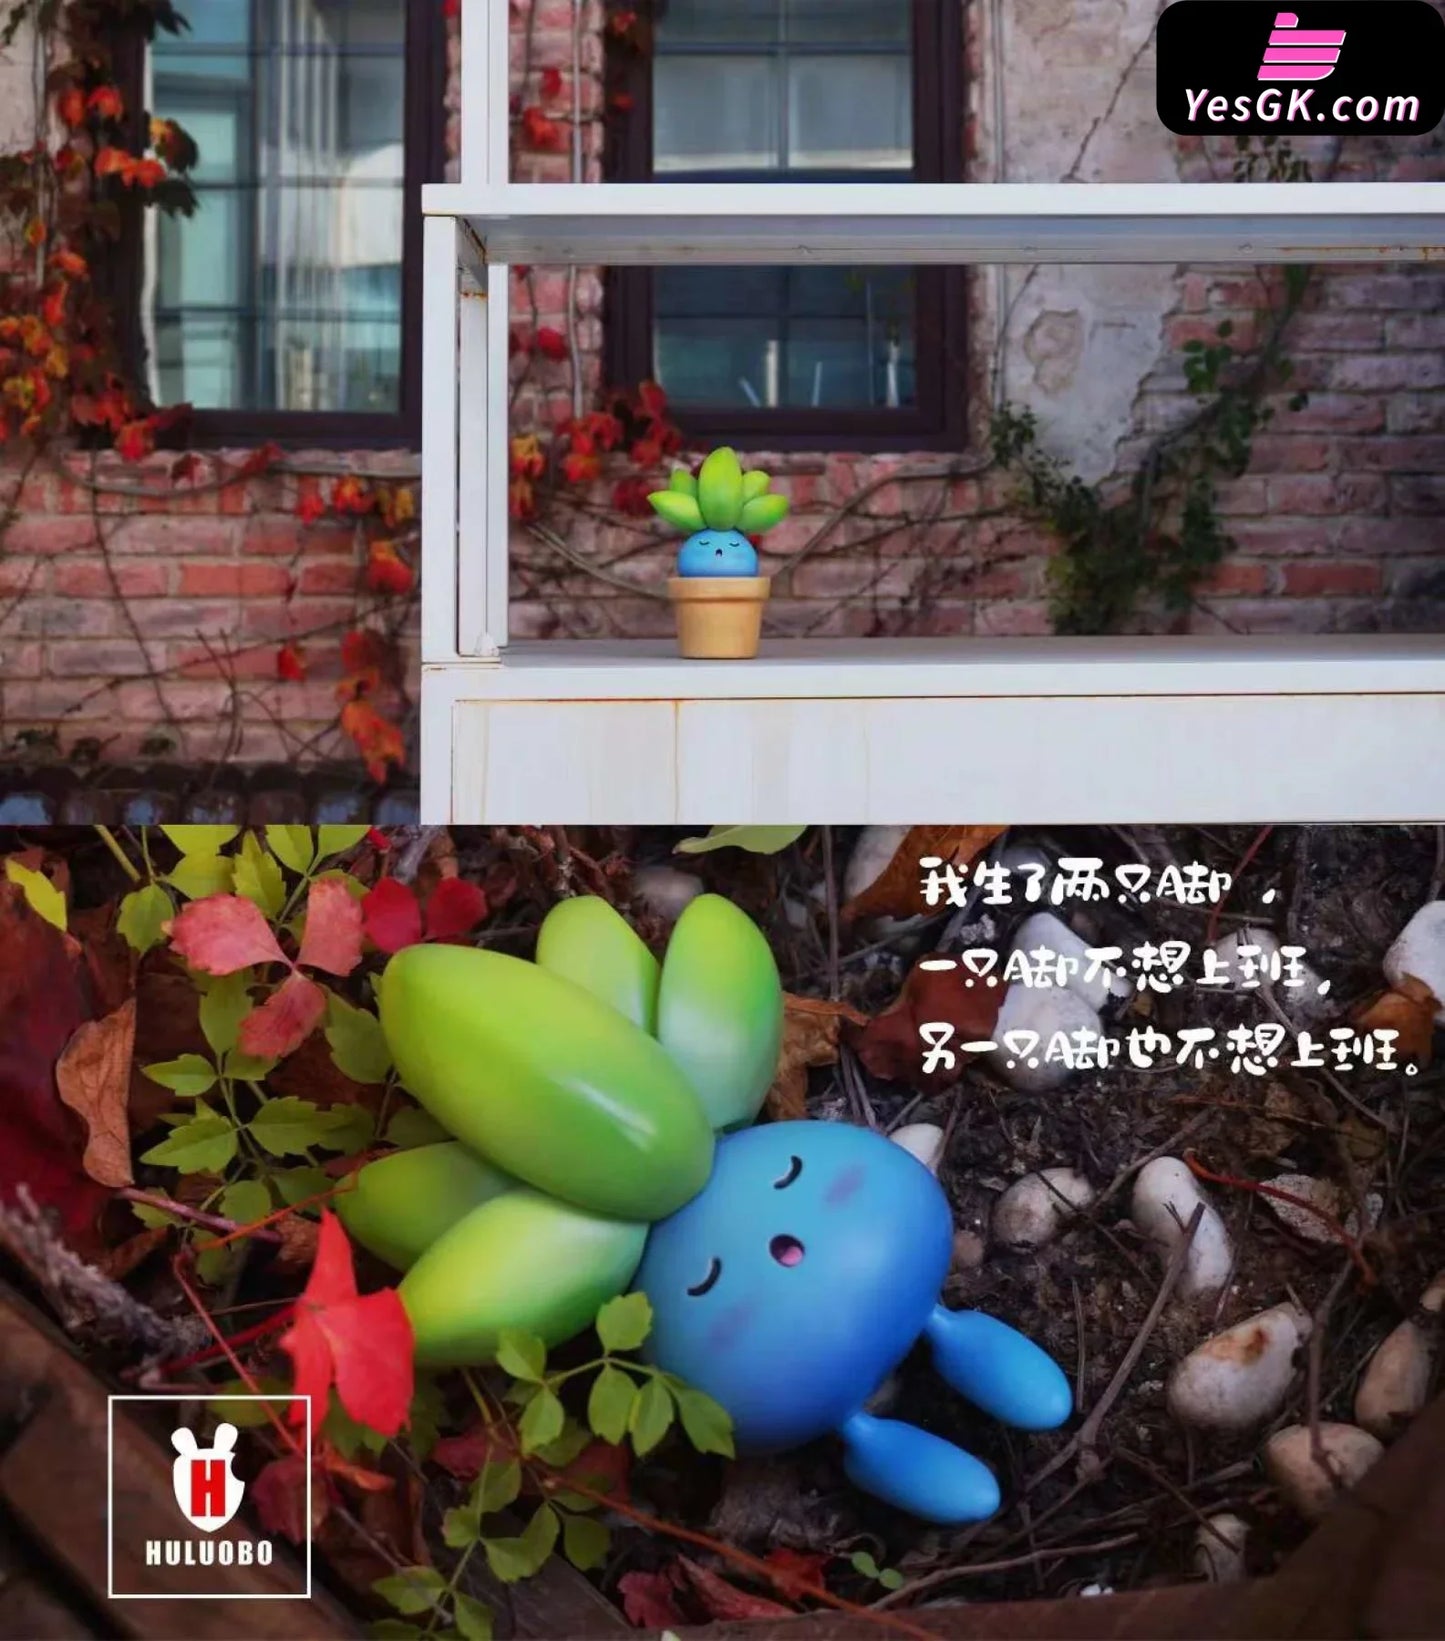 Pokémon Lying Flat Series Oddish Resin Statue - HU LUO BO Studio [In Stock]